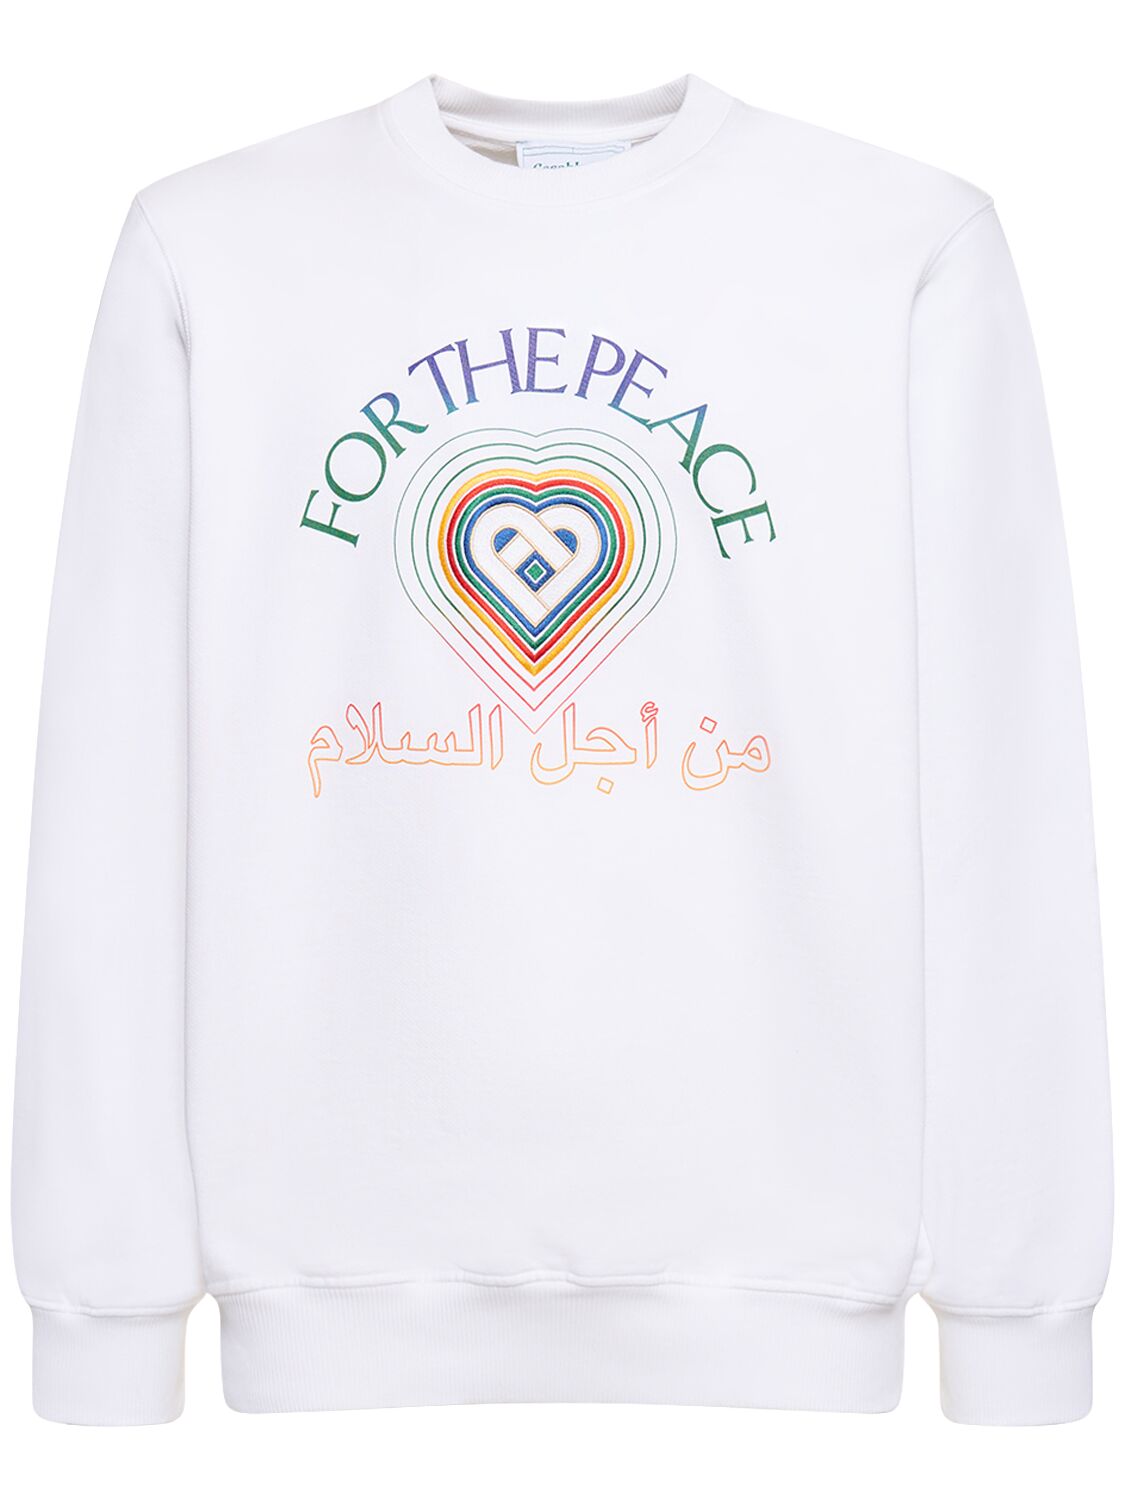 For The Peace Organic Cotton Sweatshirt